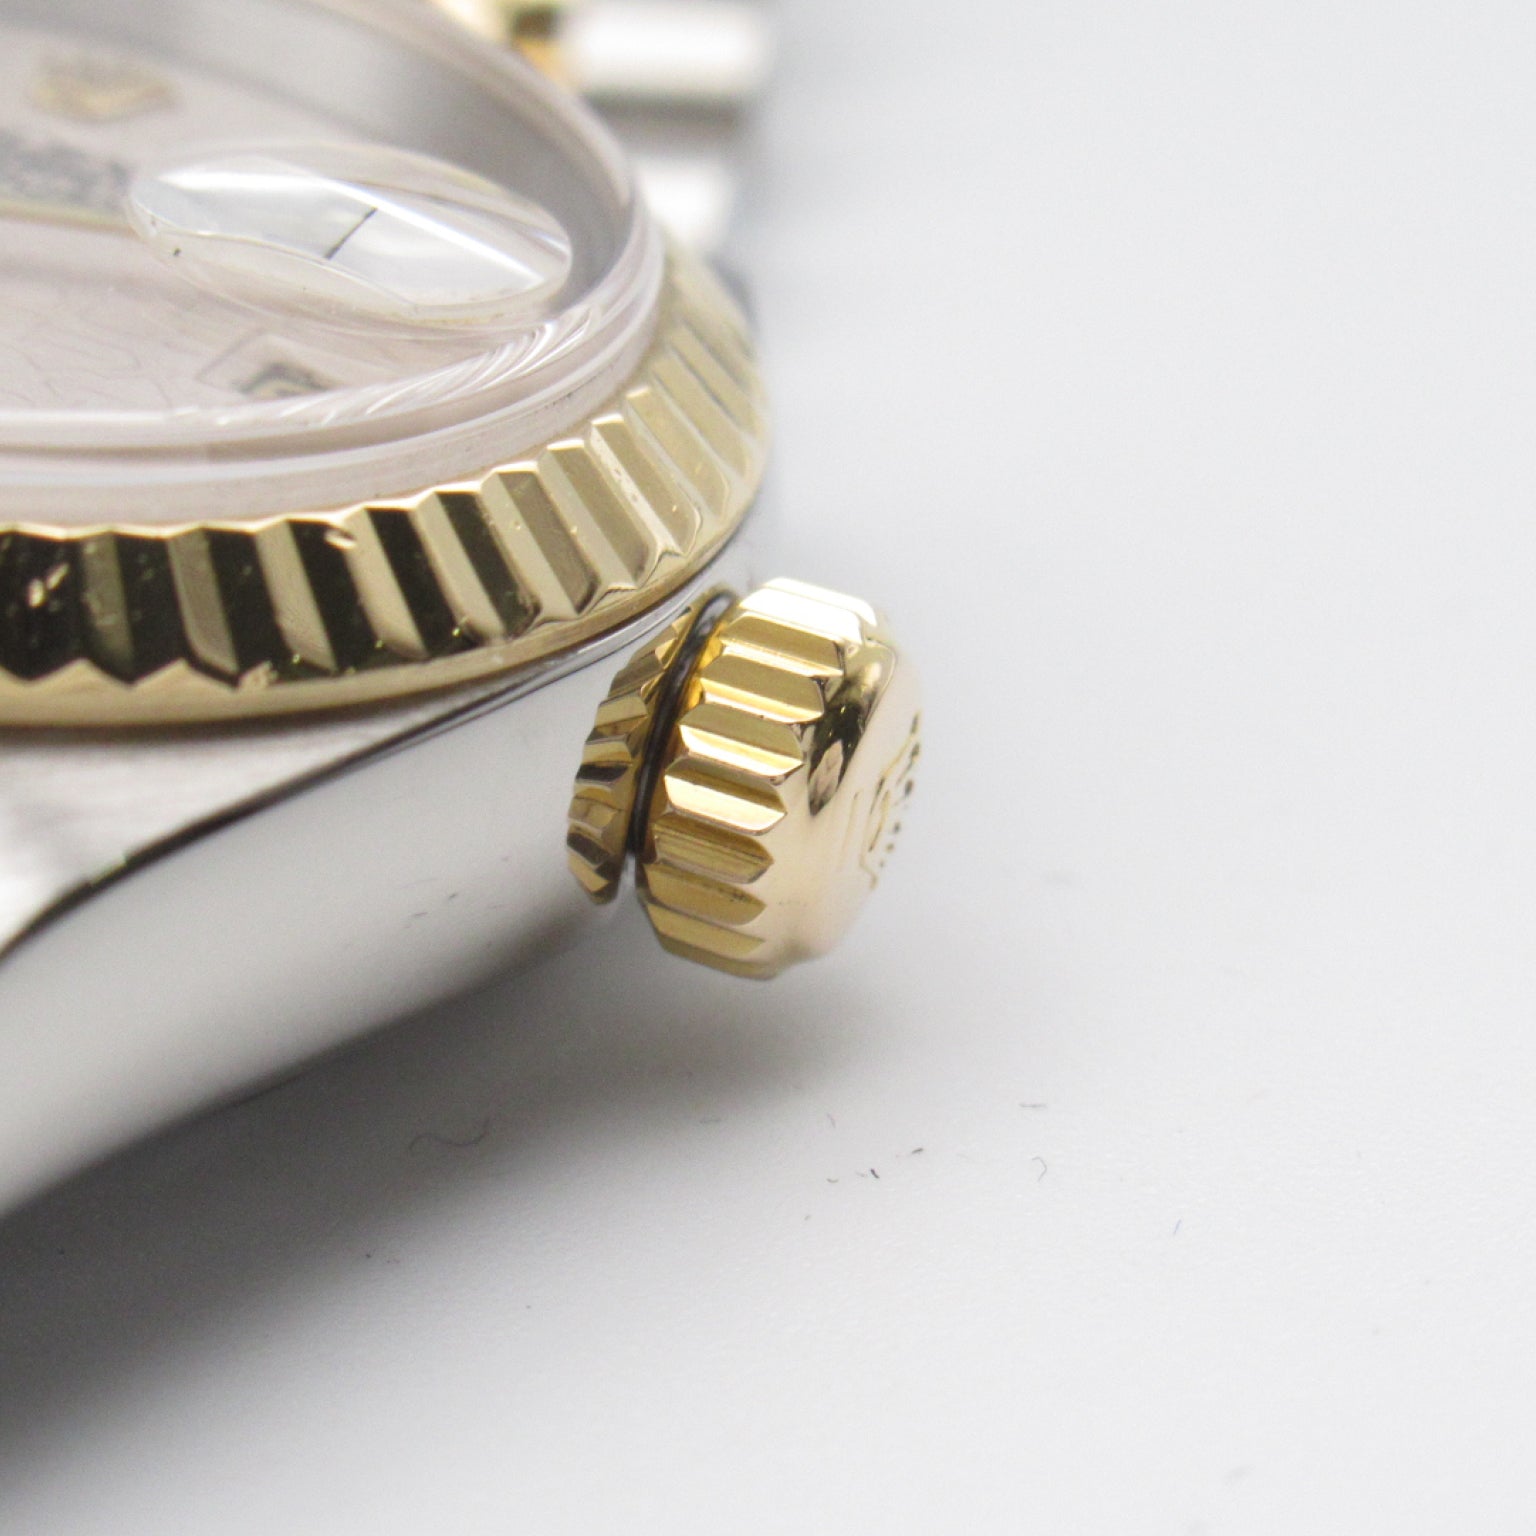 Rolex Rolex Datejust T  Watch K18 (Yellow G) Stainless Steel  White WH/CON/AR 69173